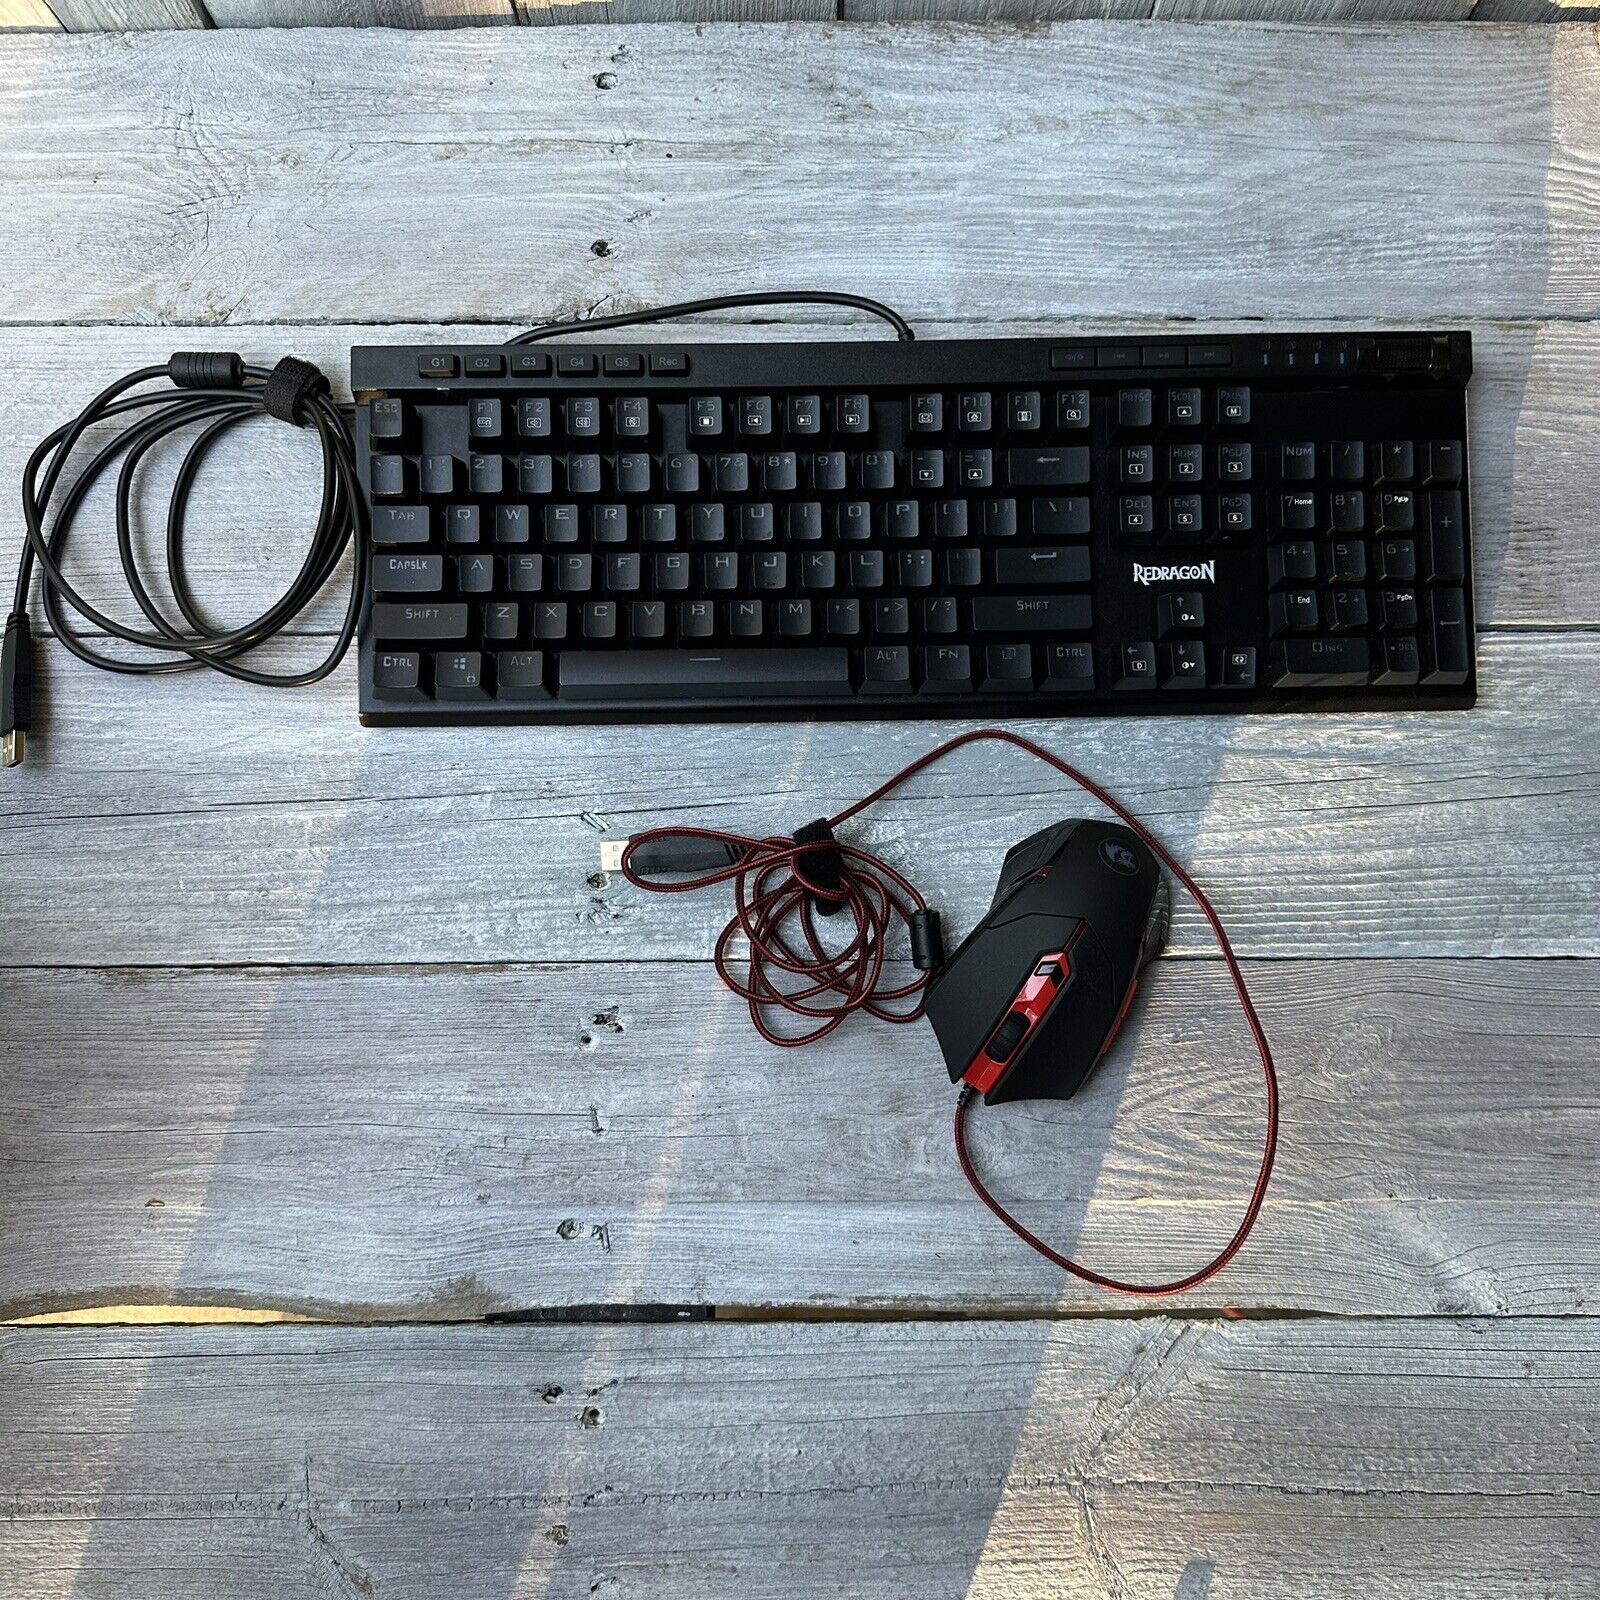 RedDragon Wired Gaming keyboard (K580 RGB) And RedDragon Mouse (S101-3)